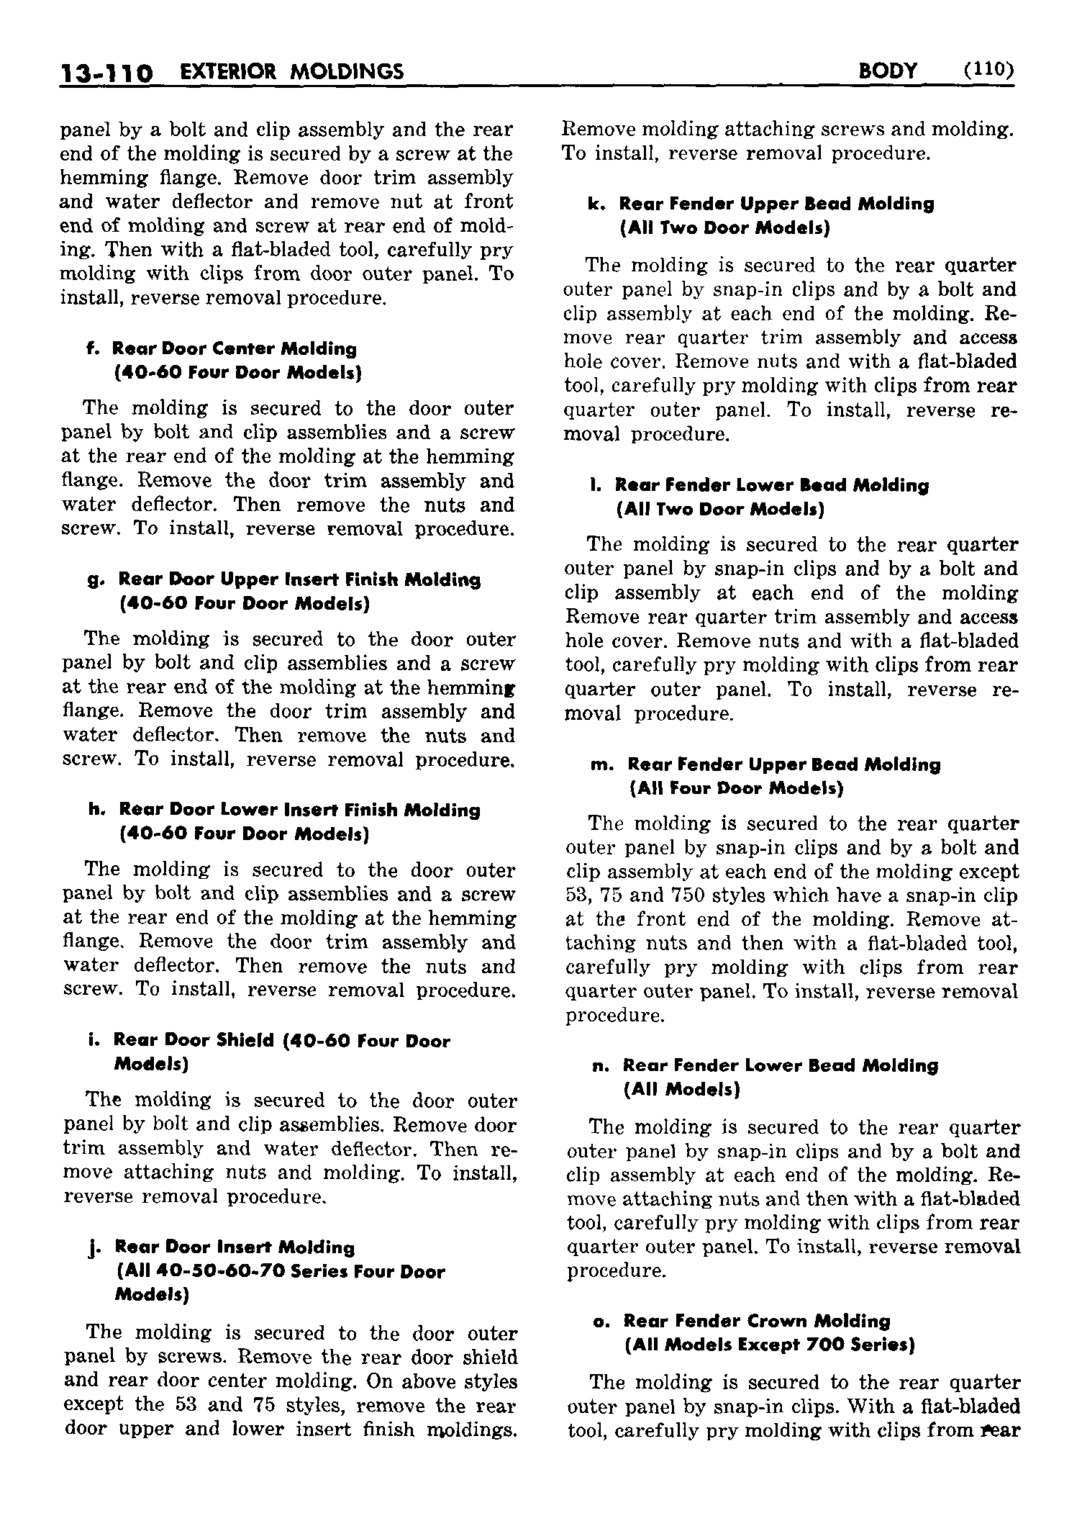 n_1958 Buick Body Service Manual-111-111.jpg